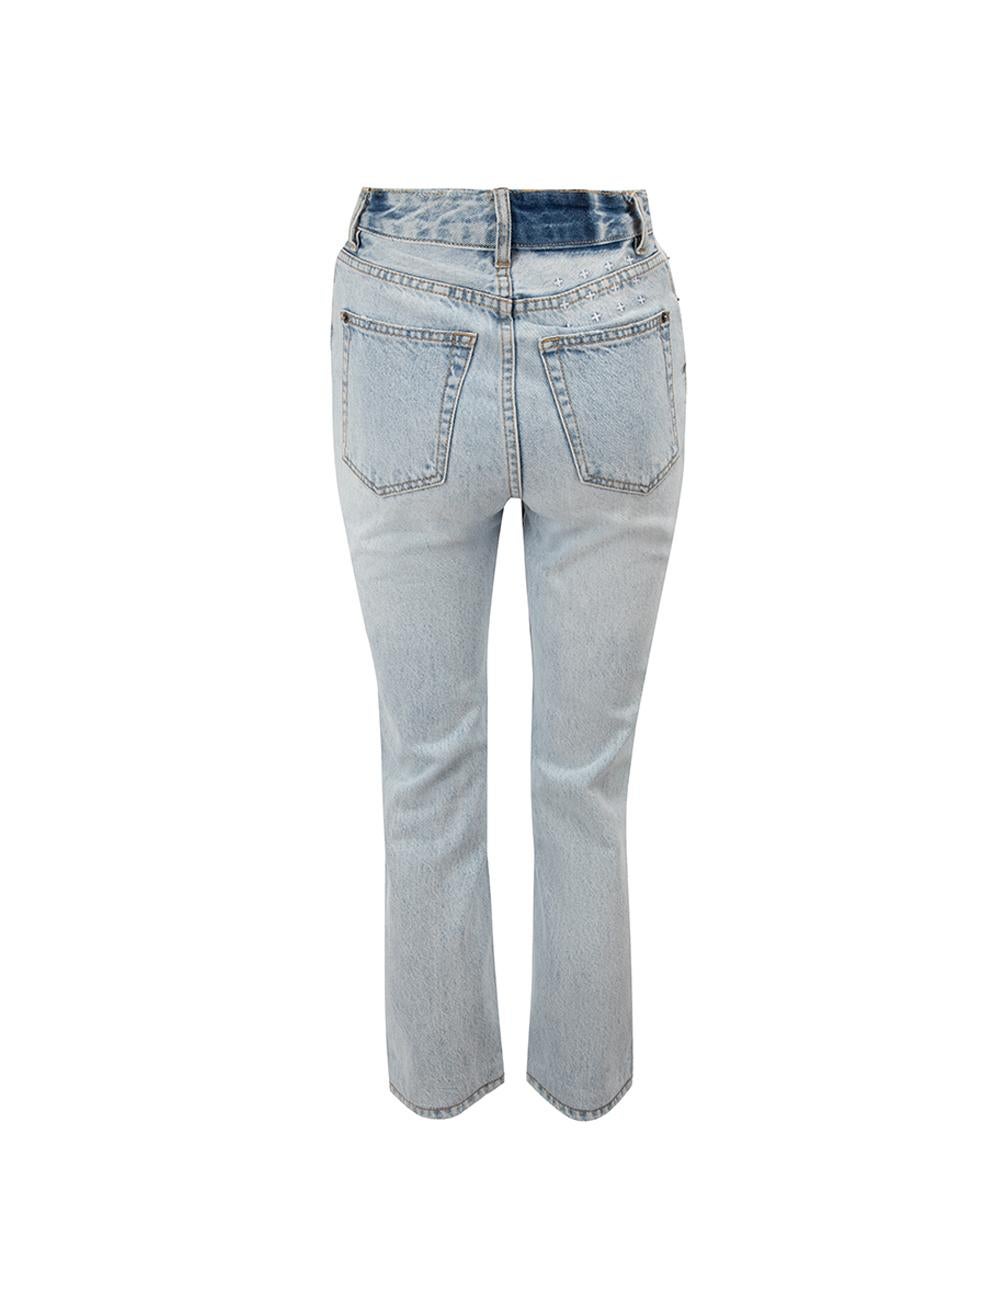 Ksubi - Jean droit en jean bleu clair lavé, taille XXS Bon état - En vente à London, GB